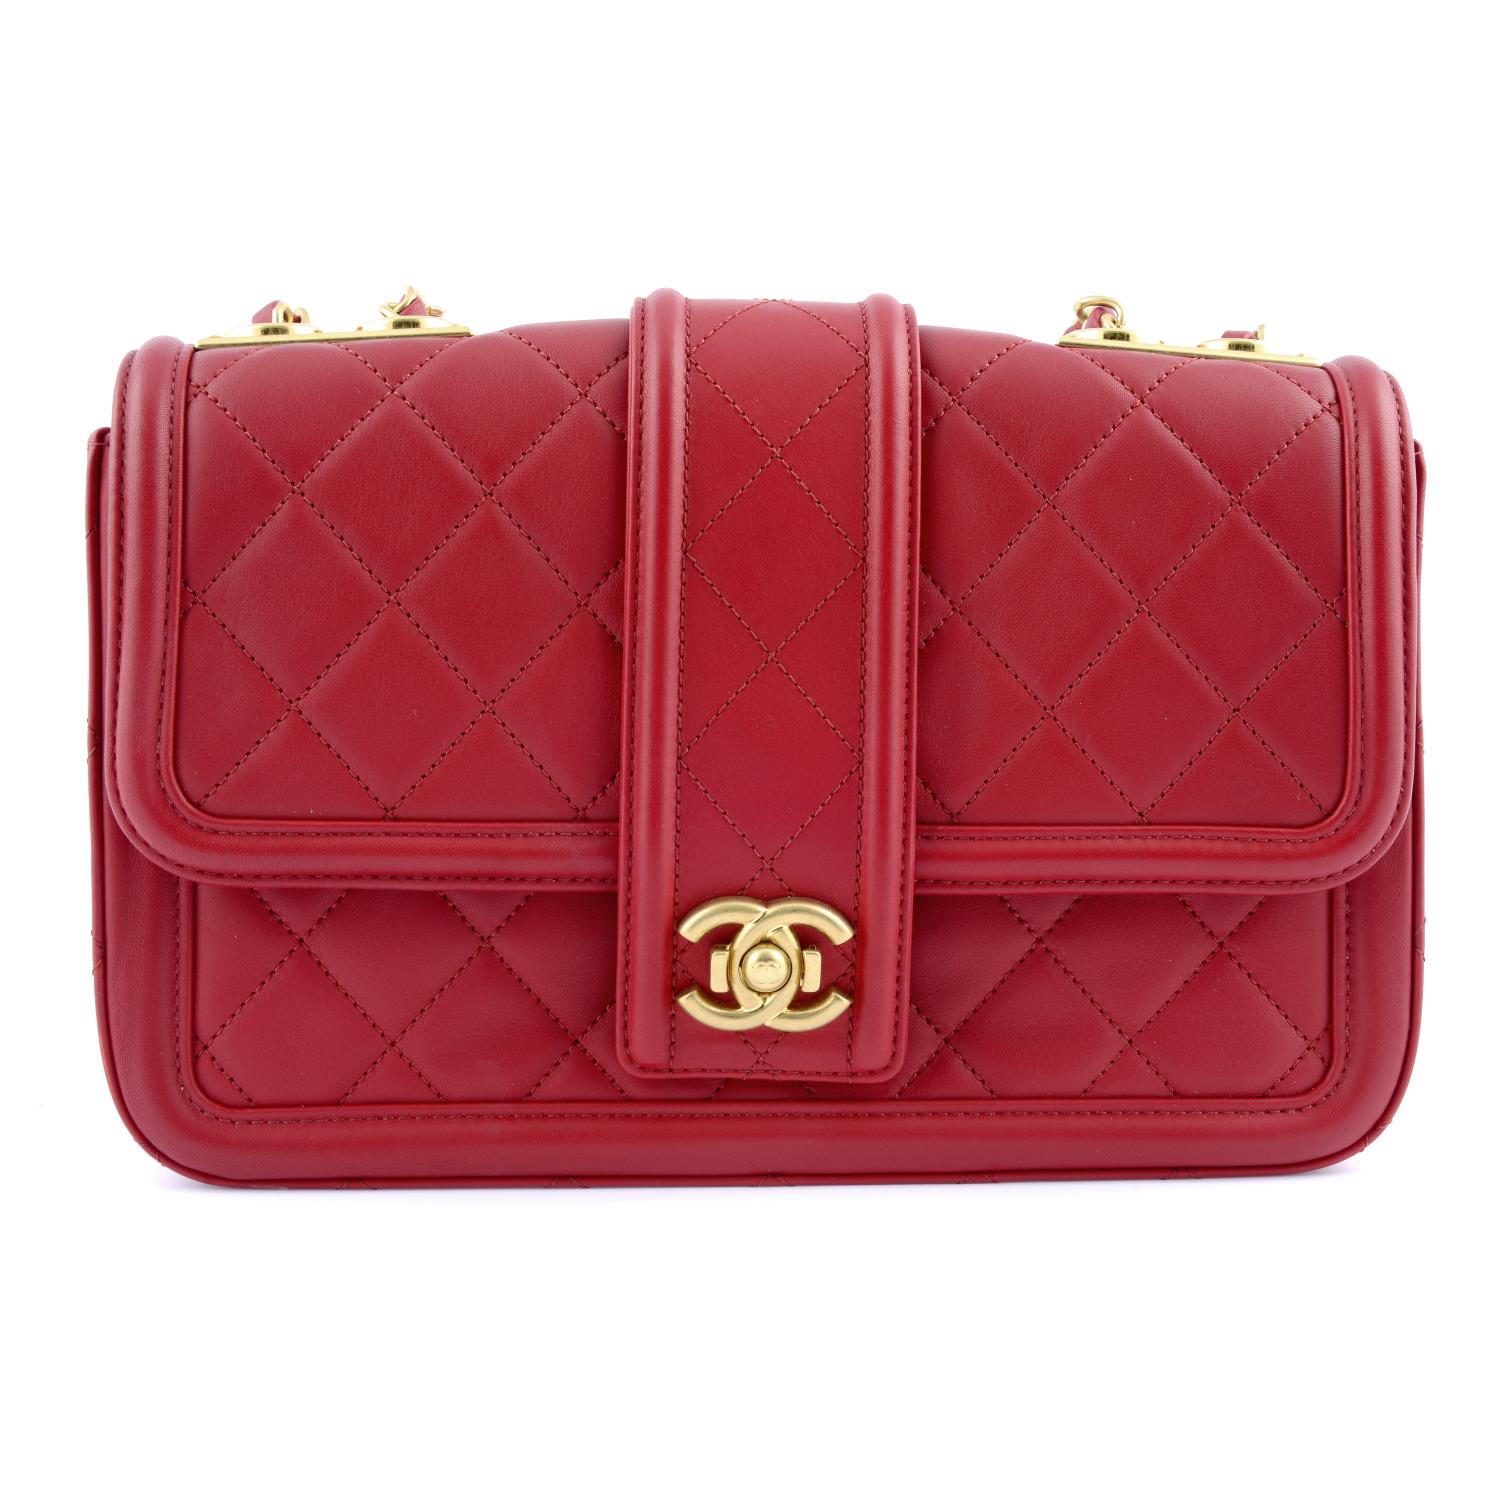 CHANEL - a red quilted Elegant handbag.